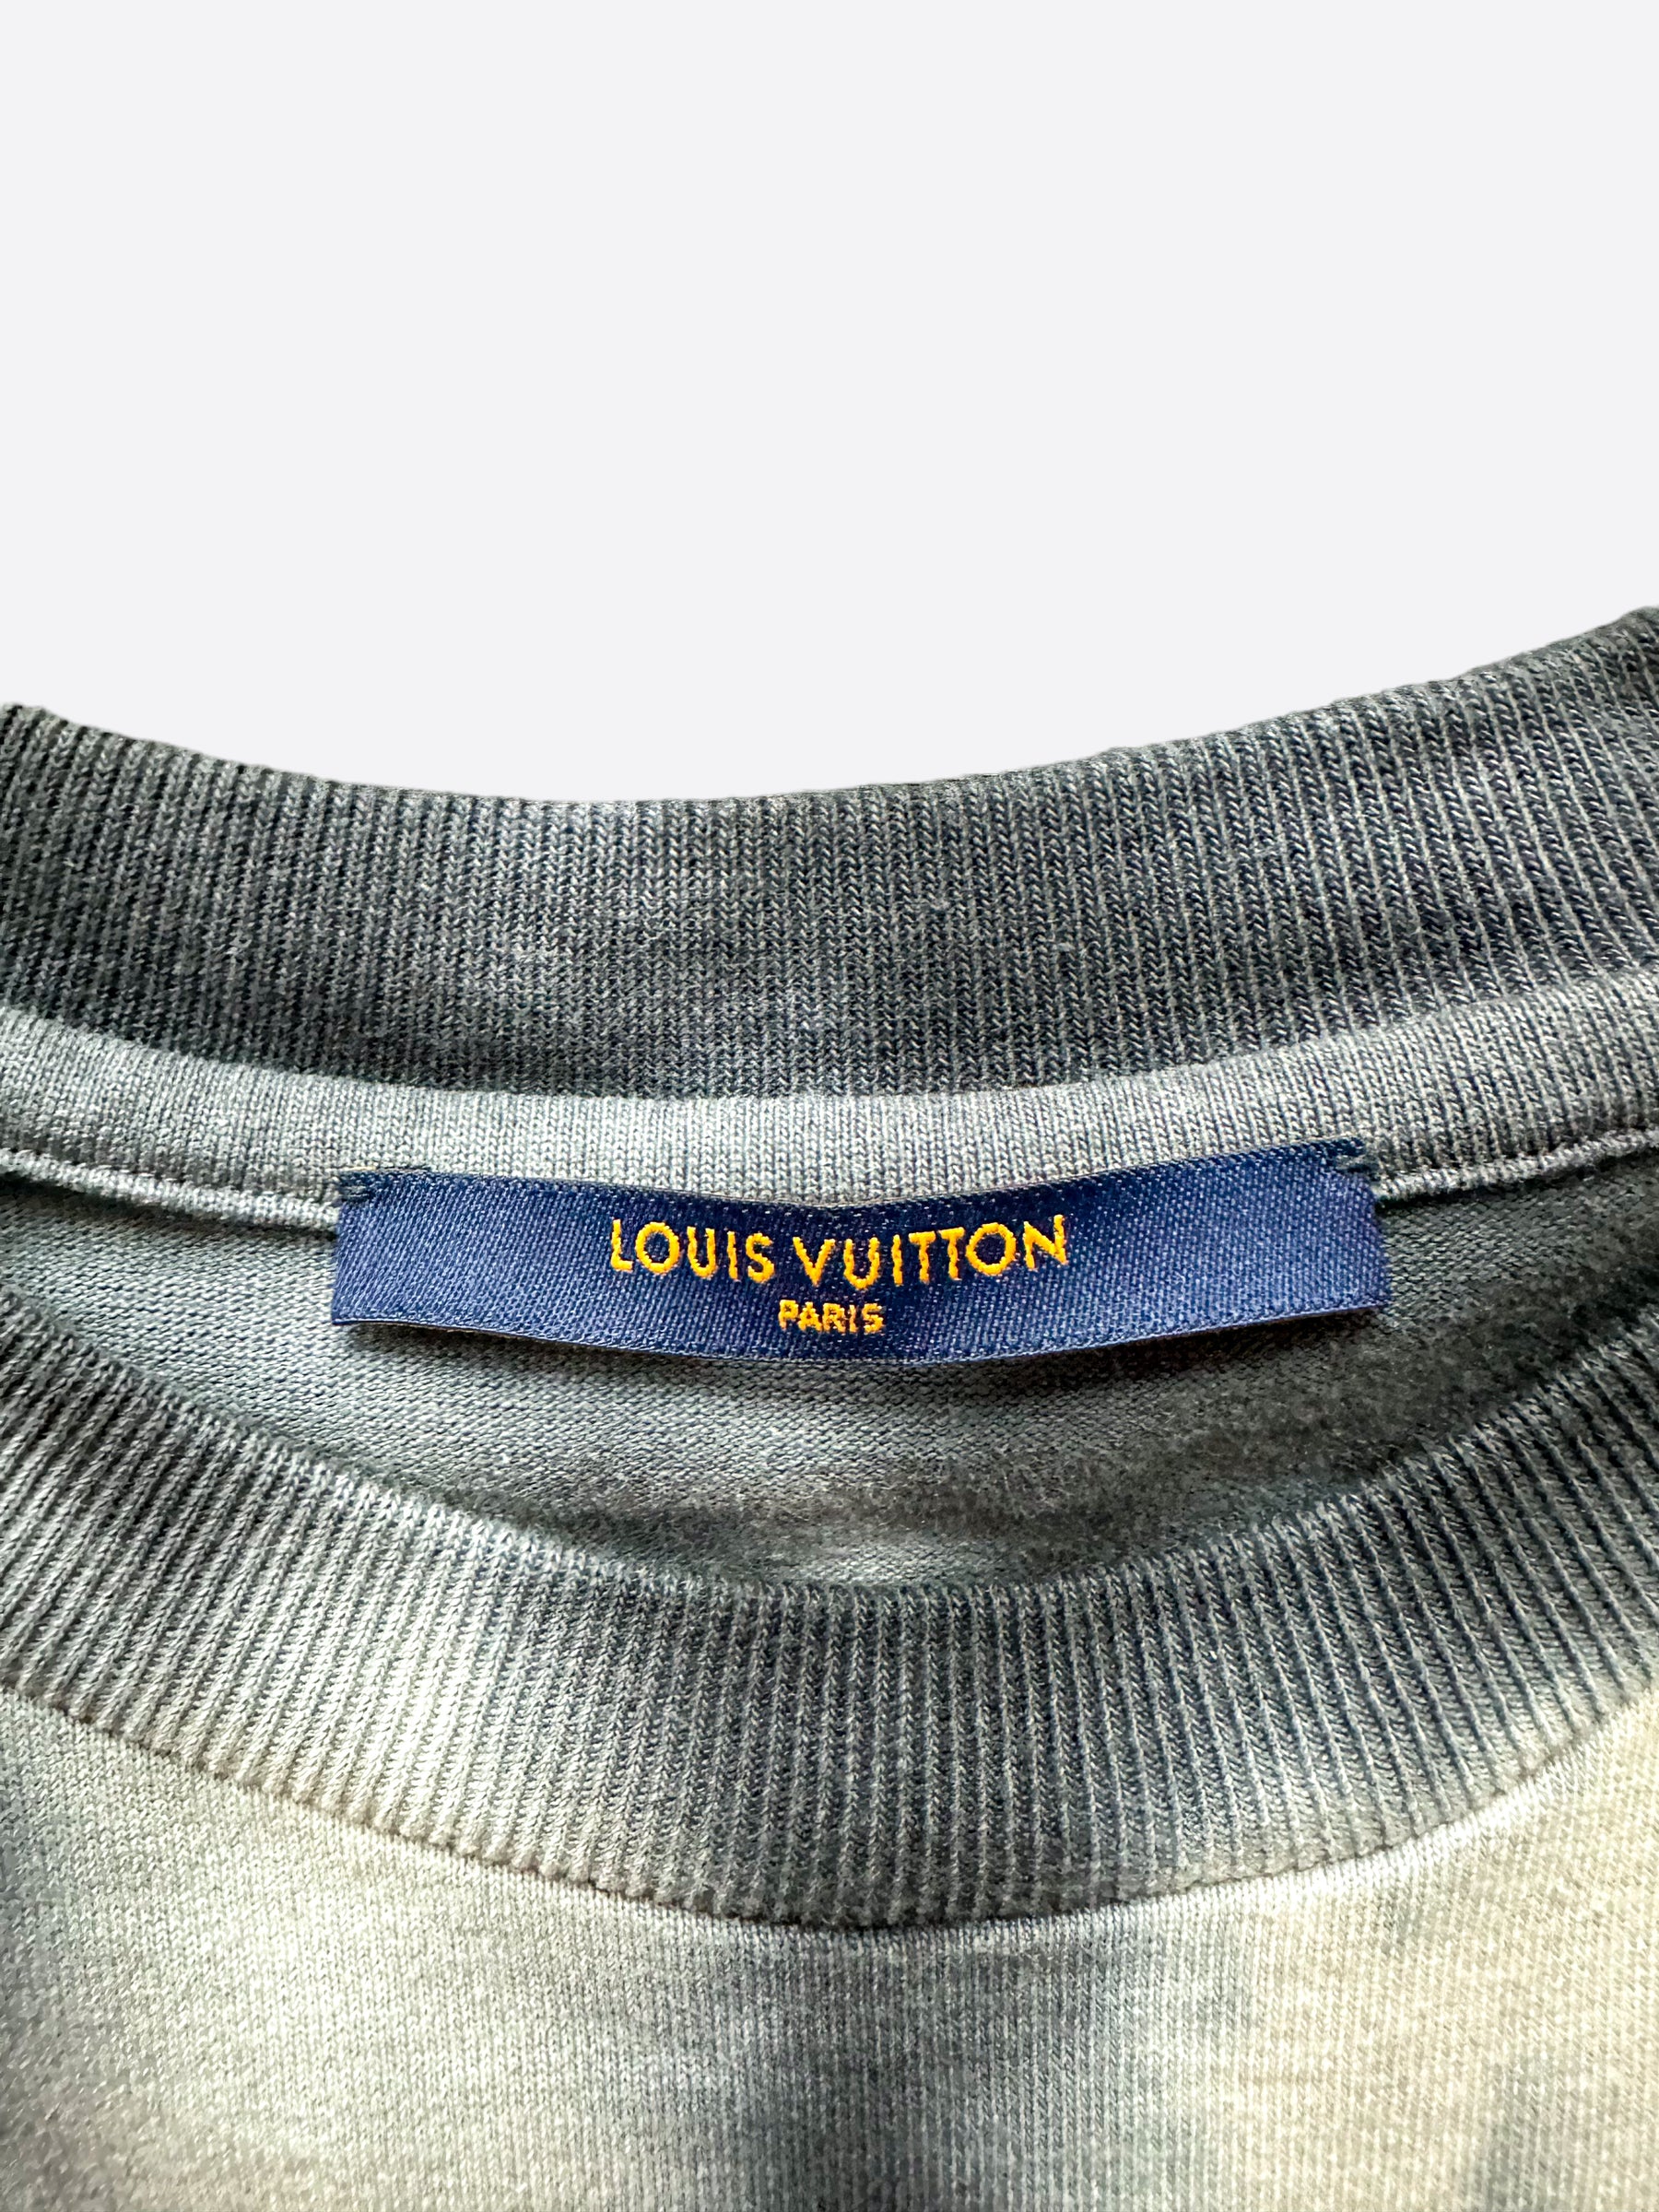 Louis Vuitton Blue Graffiti White Sweatshirt, Sweater, Size S, L and 2XL